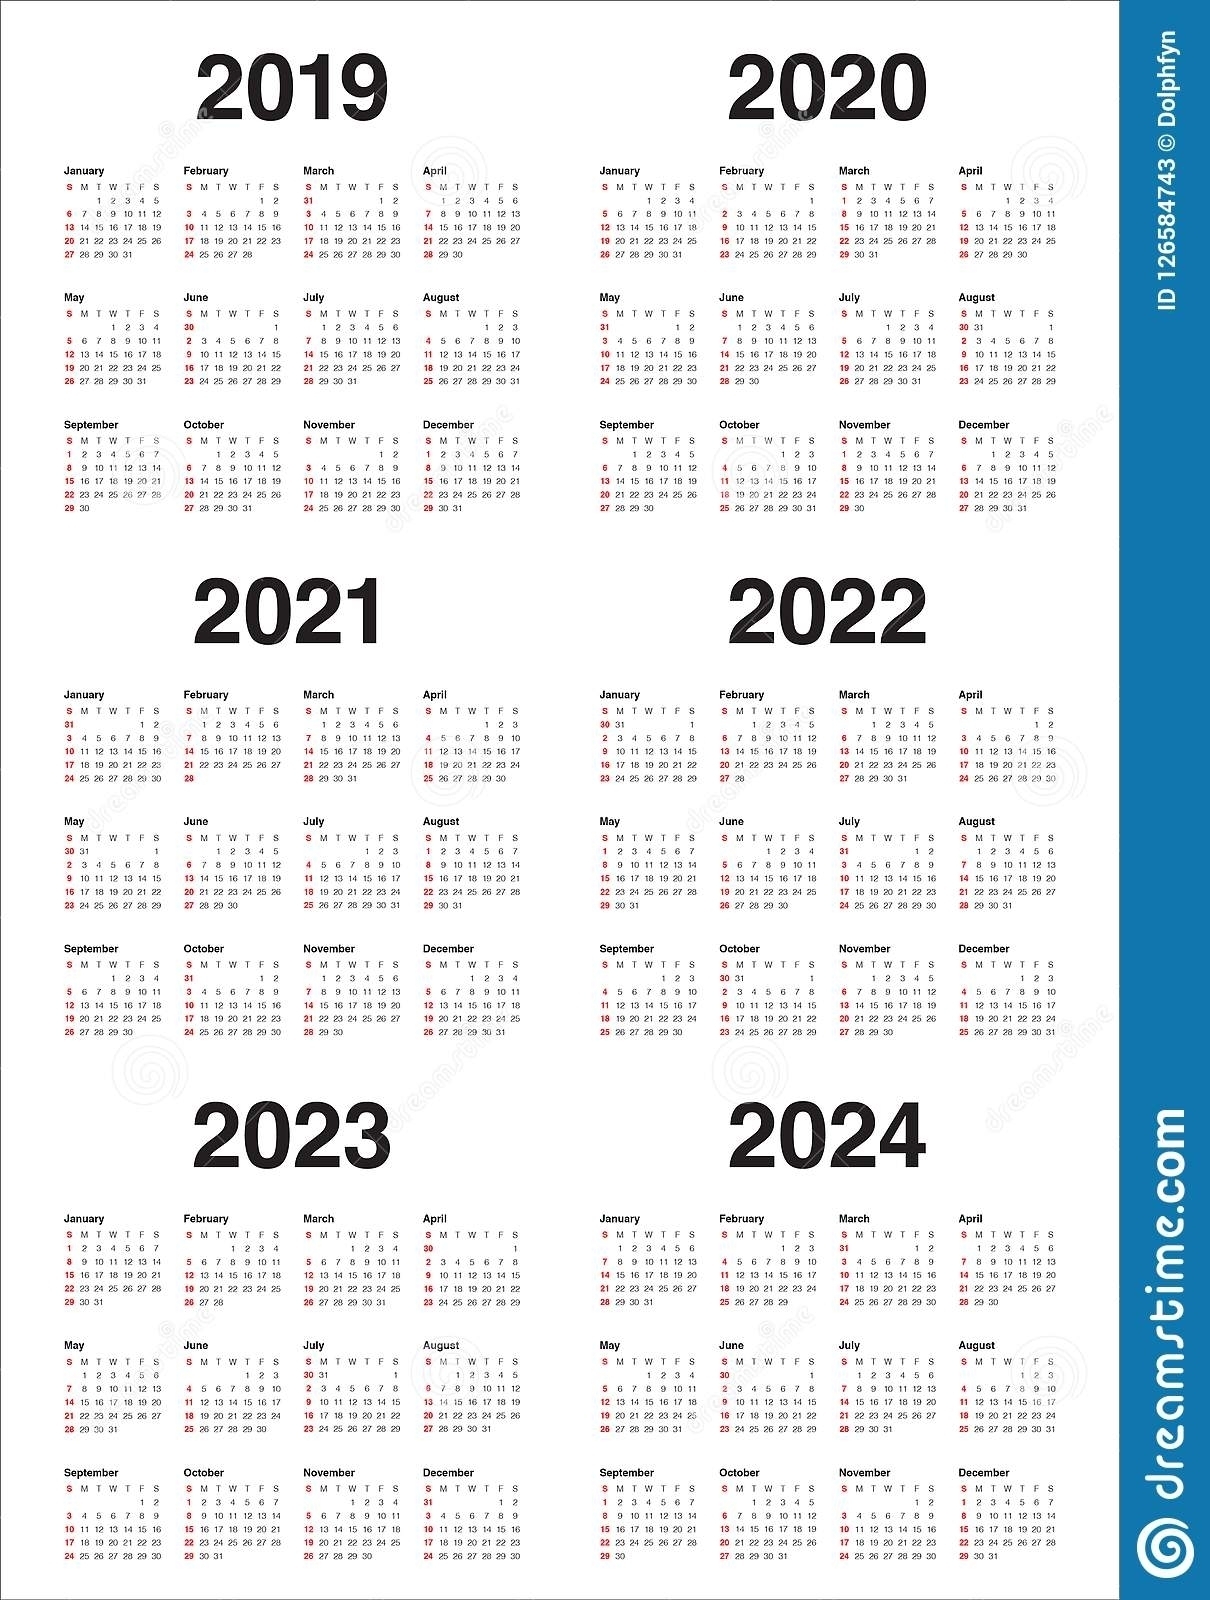 Take 3 Year Printable Calendar 2021 2022 2023